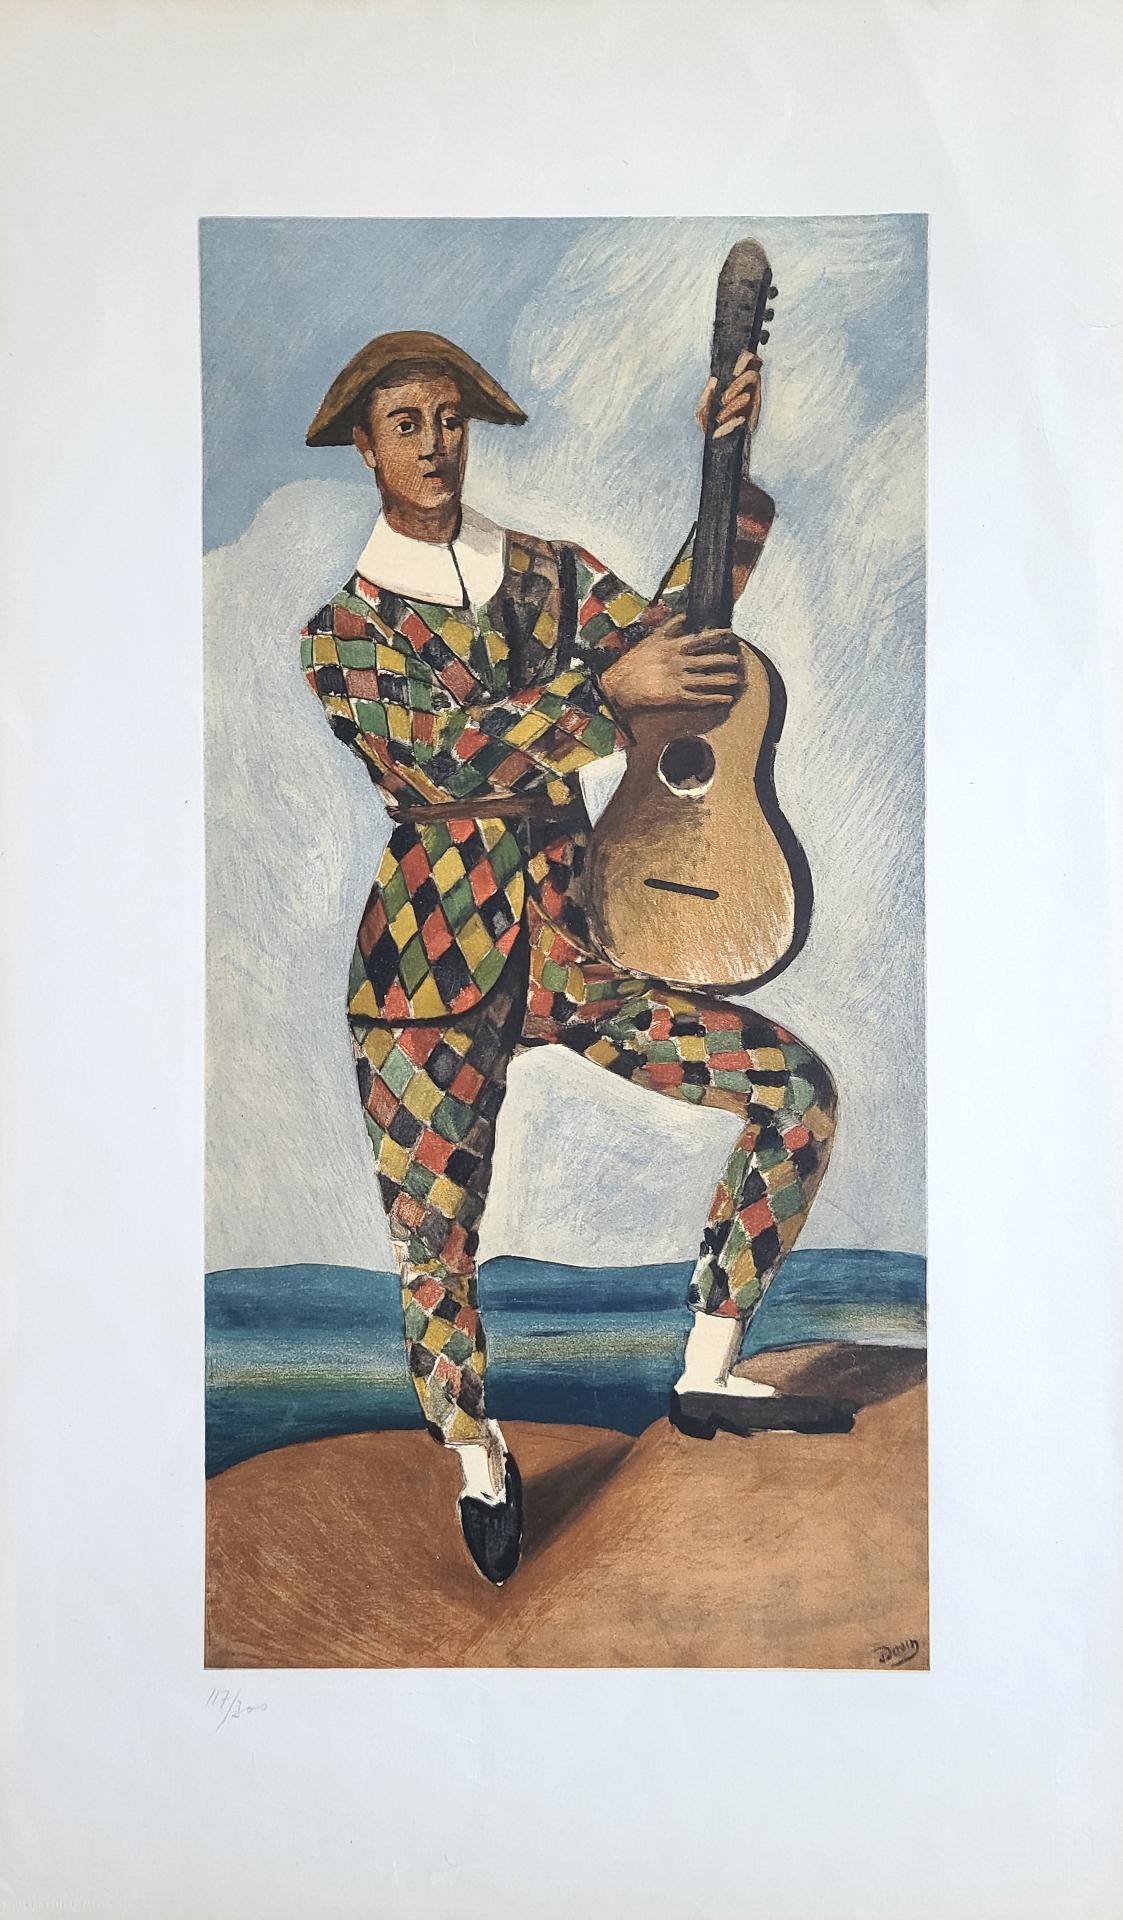 André Derain (1880-1954) - Arlequin à la guitare, c. 1950